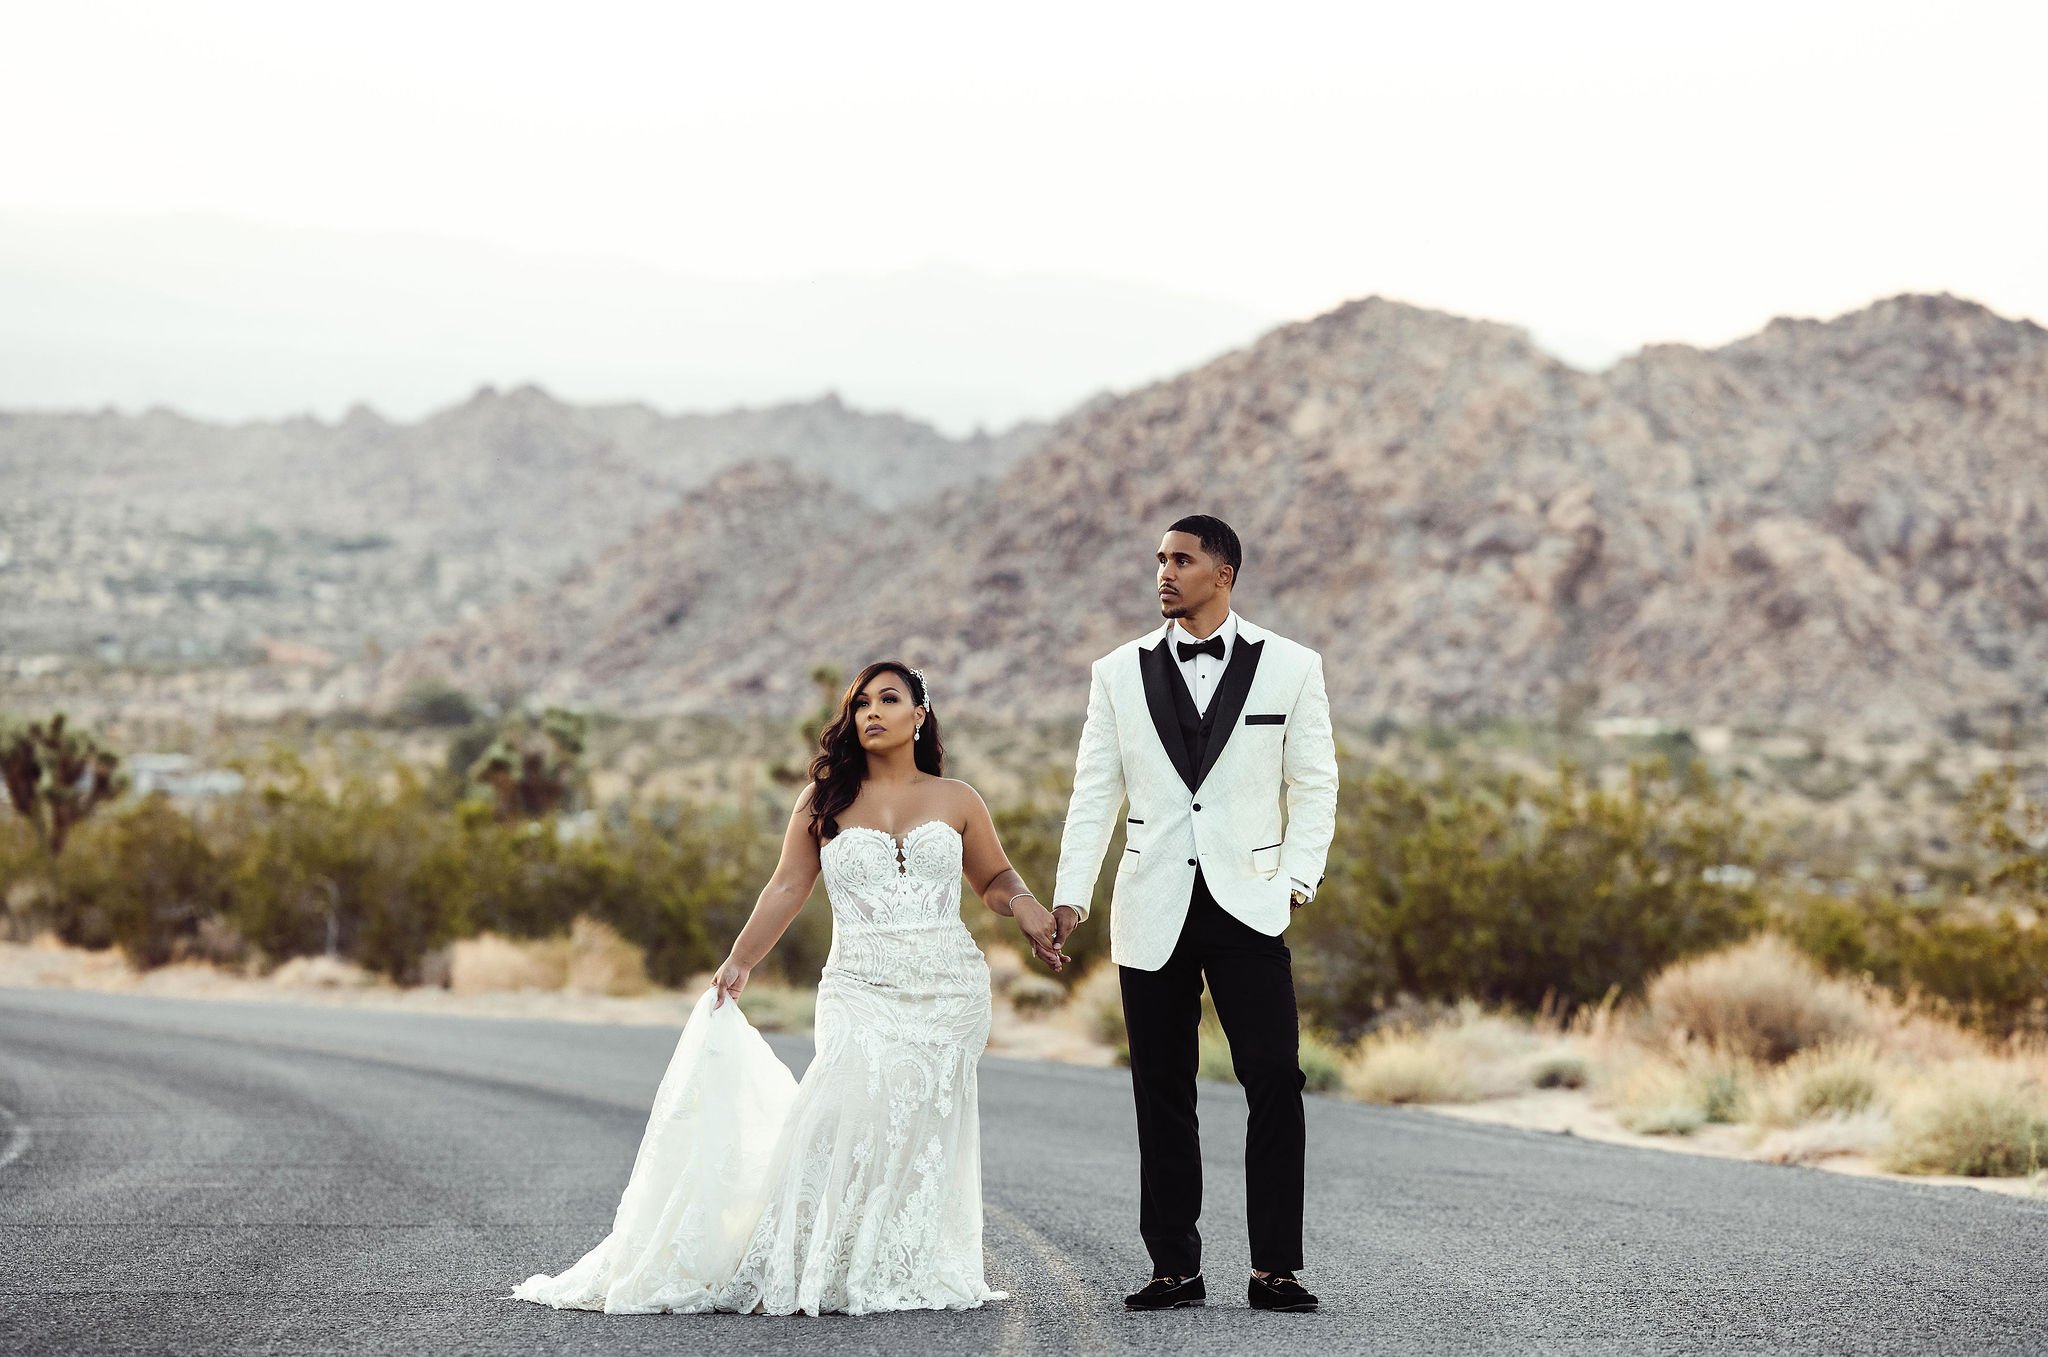 Joshua Tree - California wedding photographer - bride - groom - desert photography.jpg